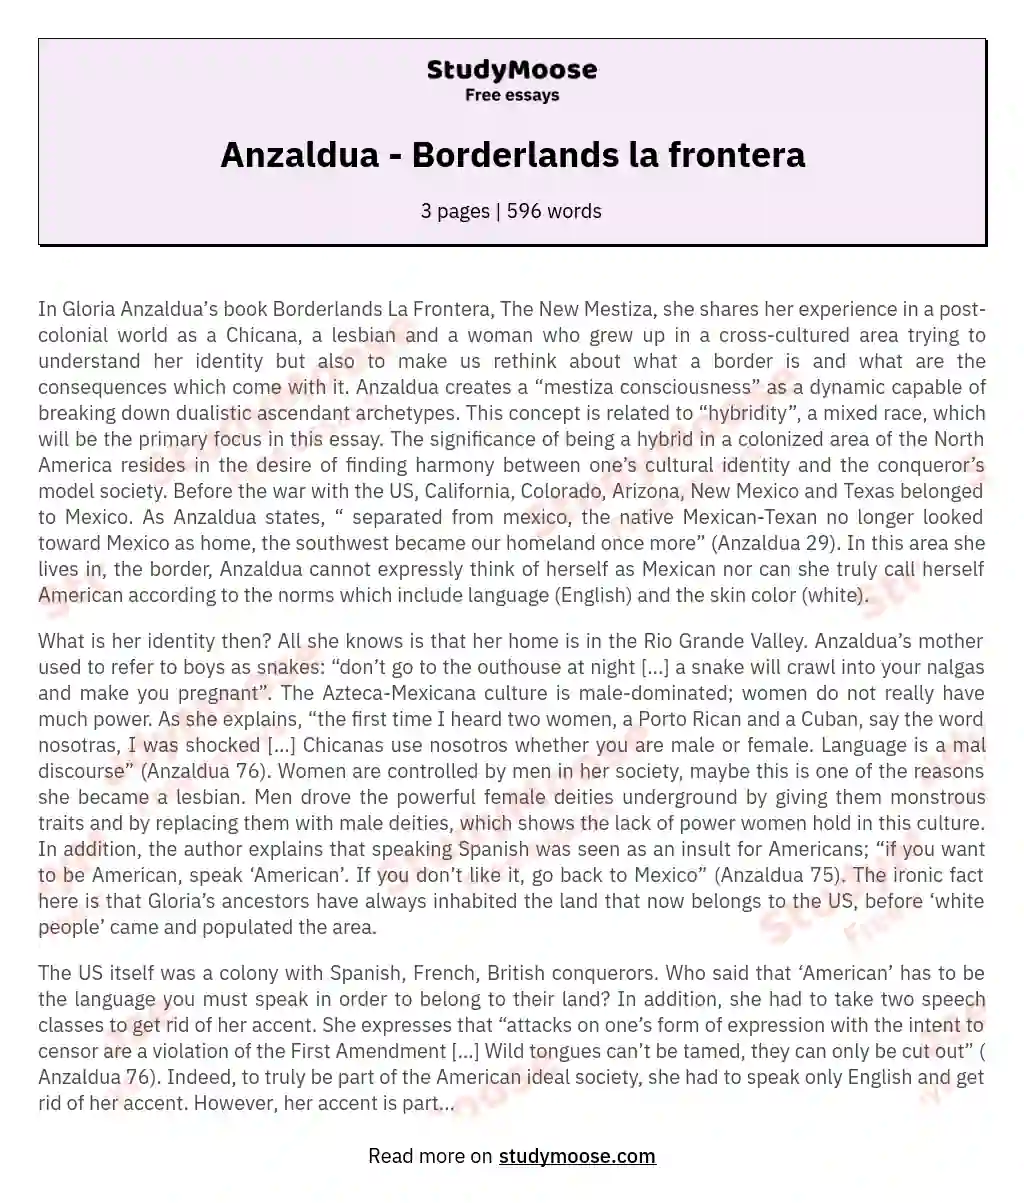 Anzaldua - Borderlands la frontera essay